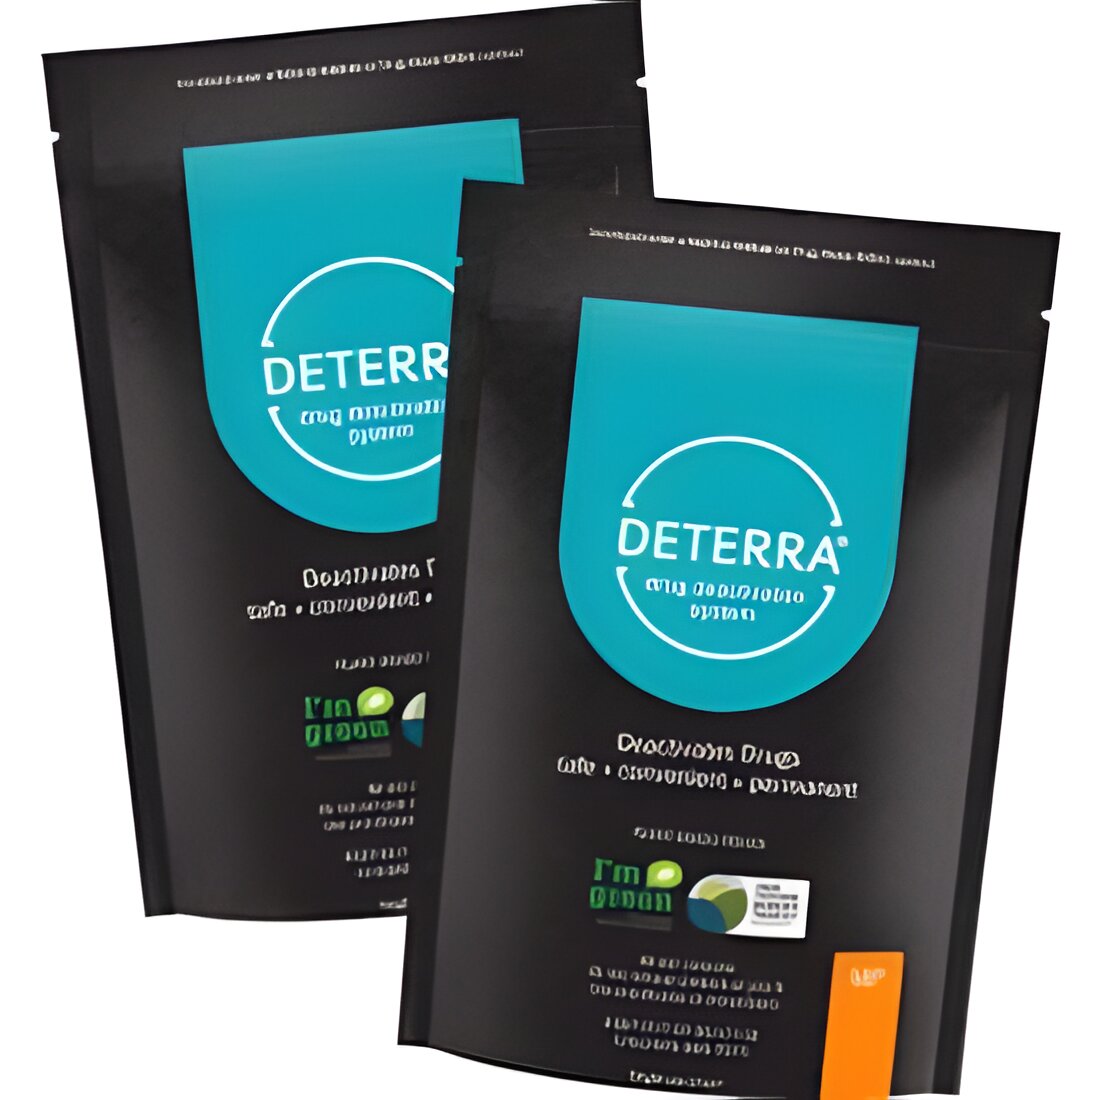 Free Deterra Drug Deactivation and Disposal Pouche